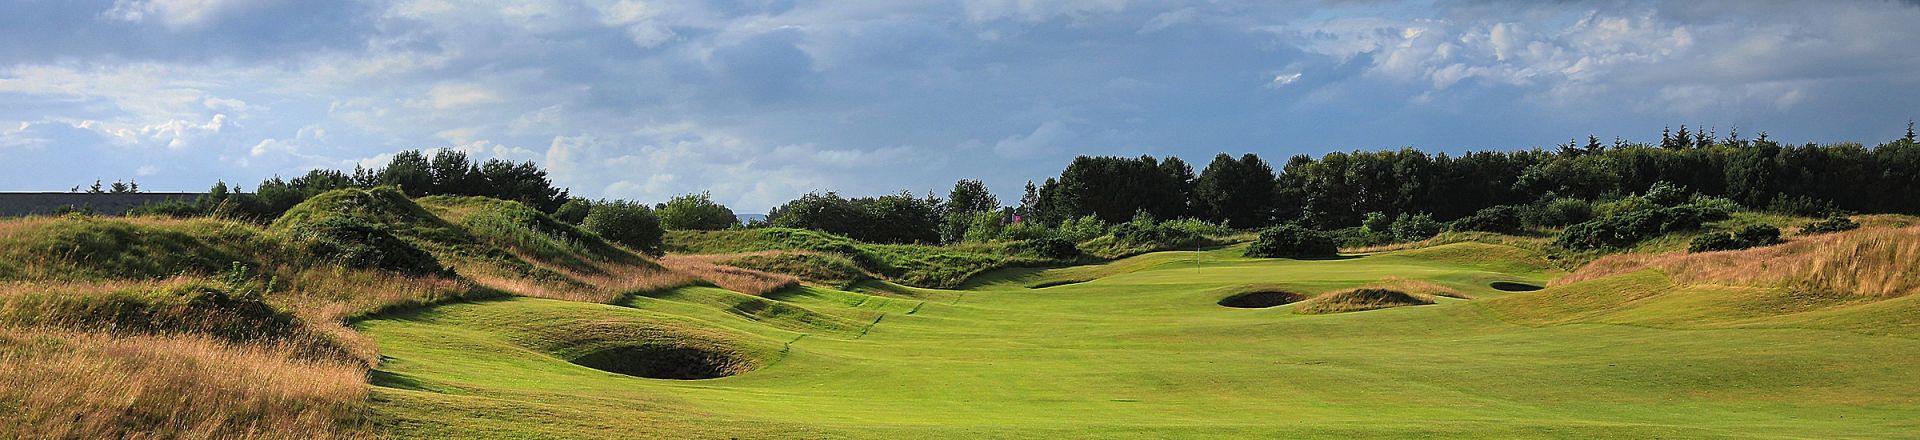 Dundonald Links Golf Course